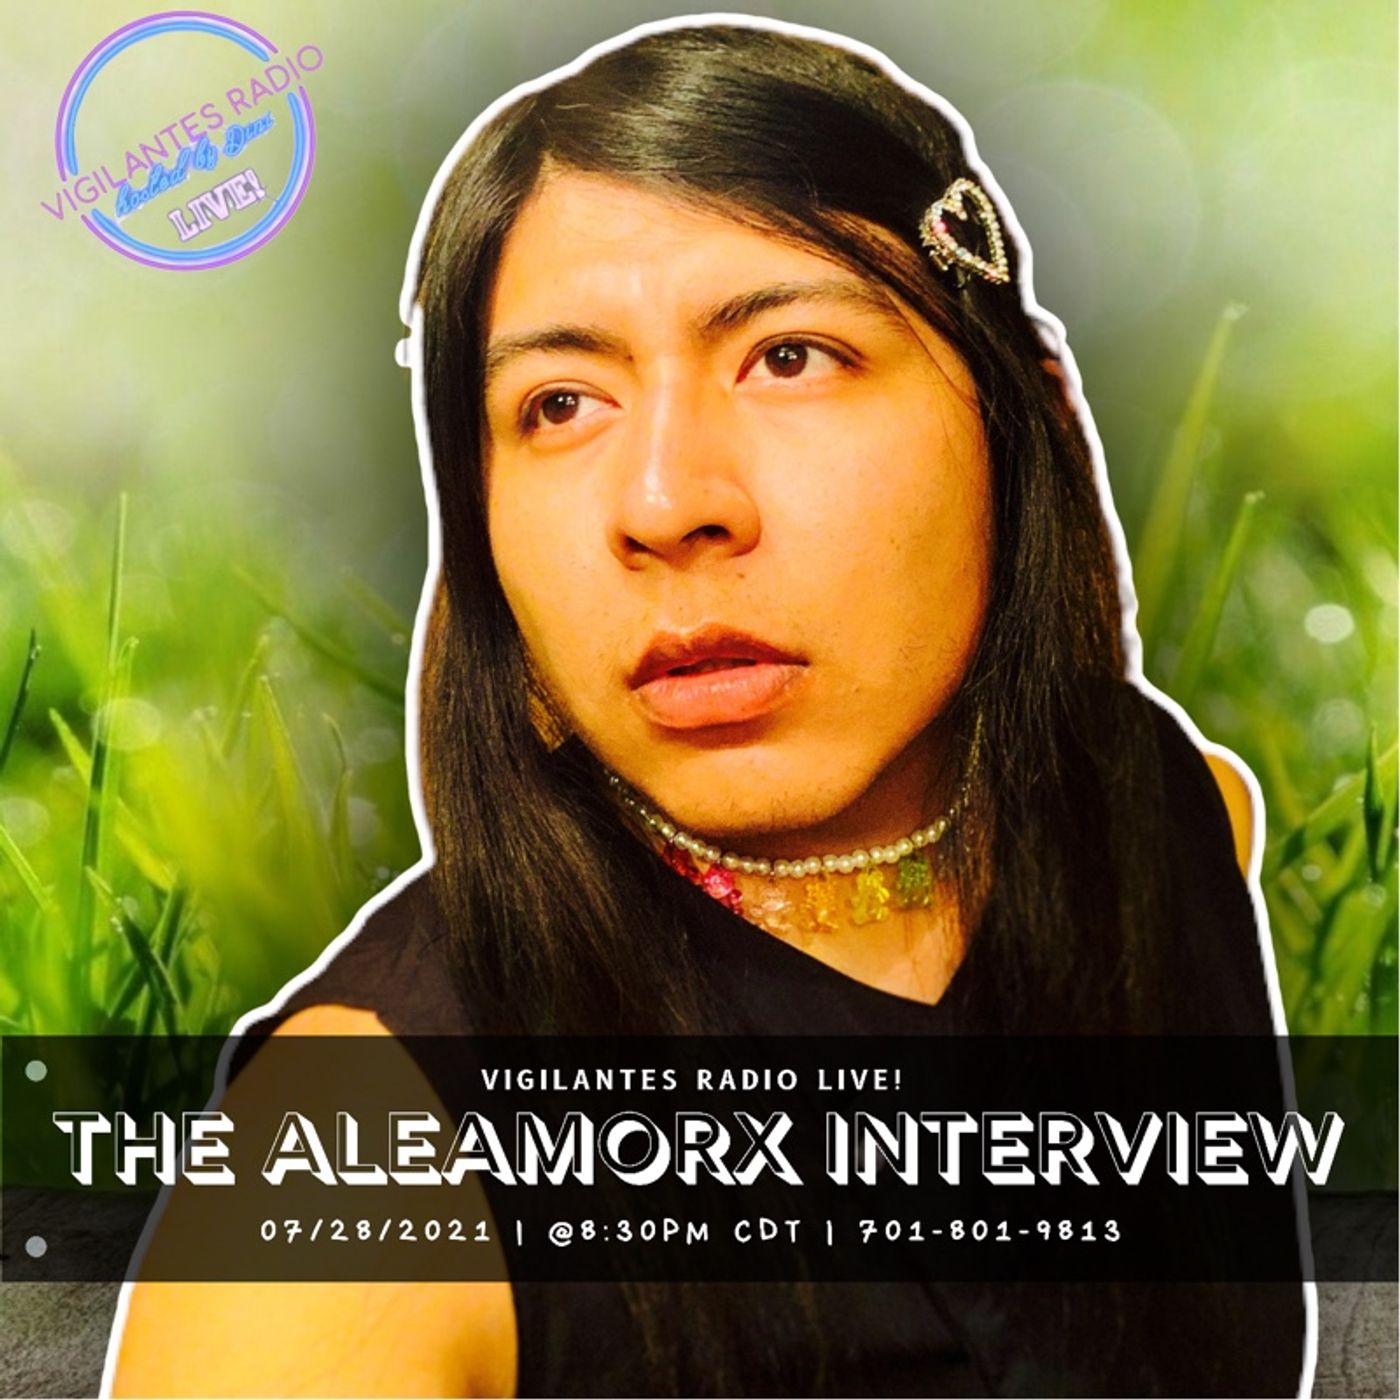 The AlemorX Interview. Image